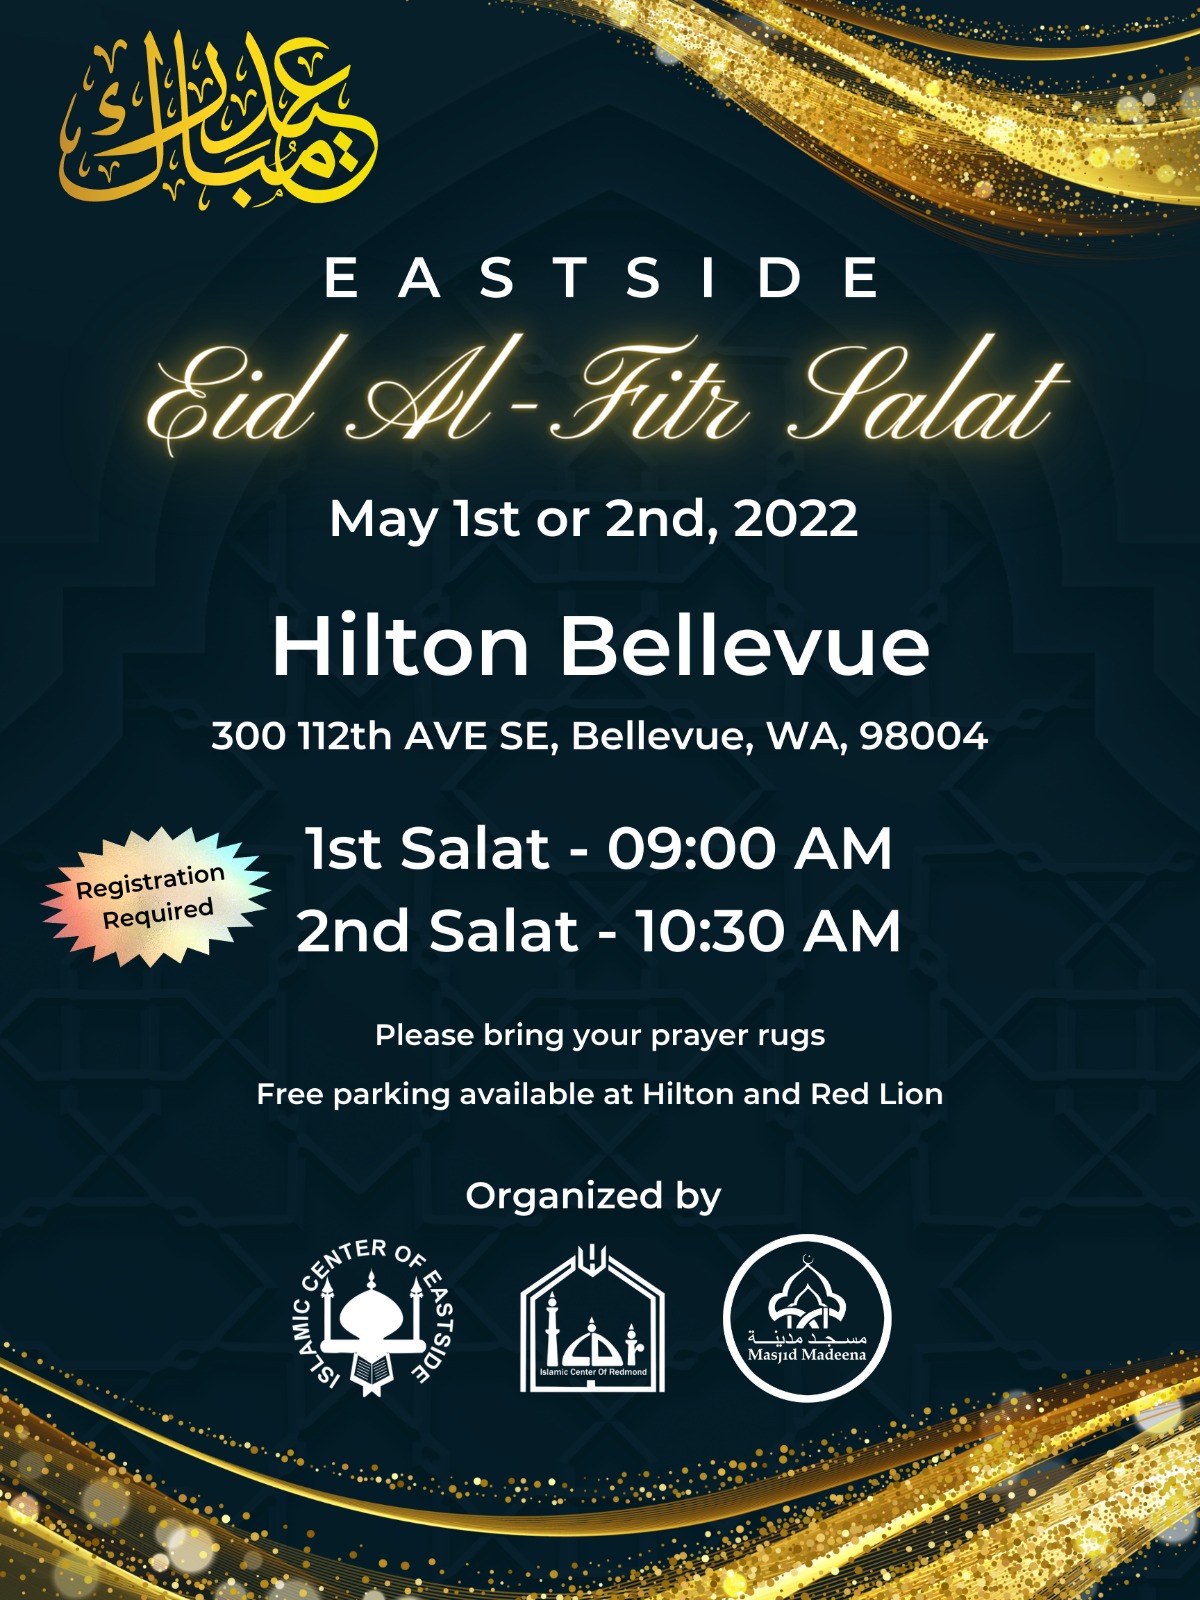 Eid Salah